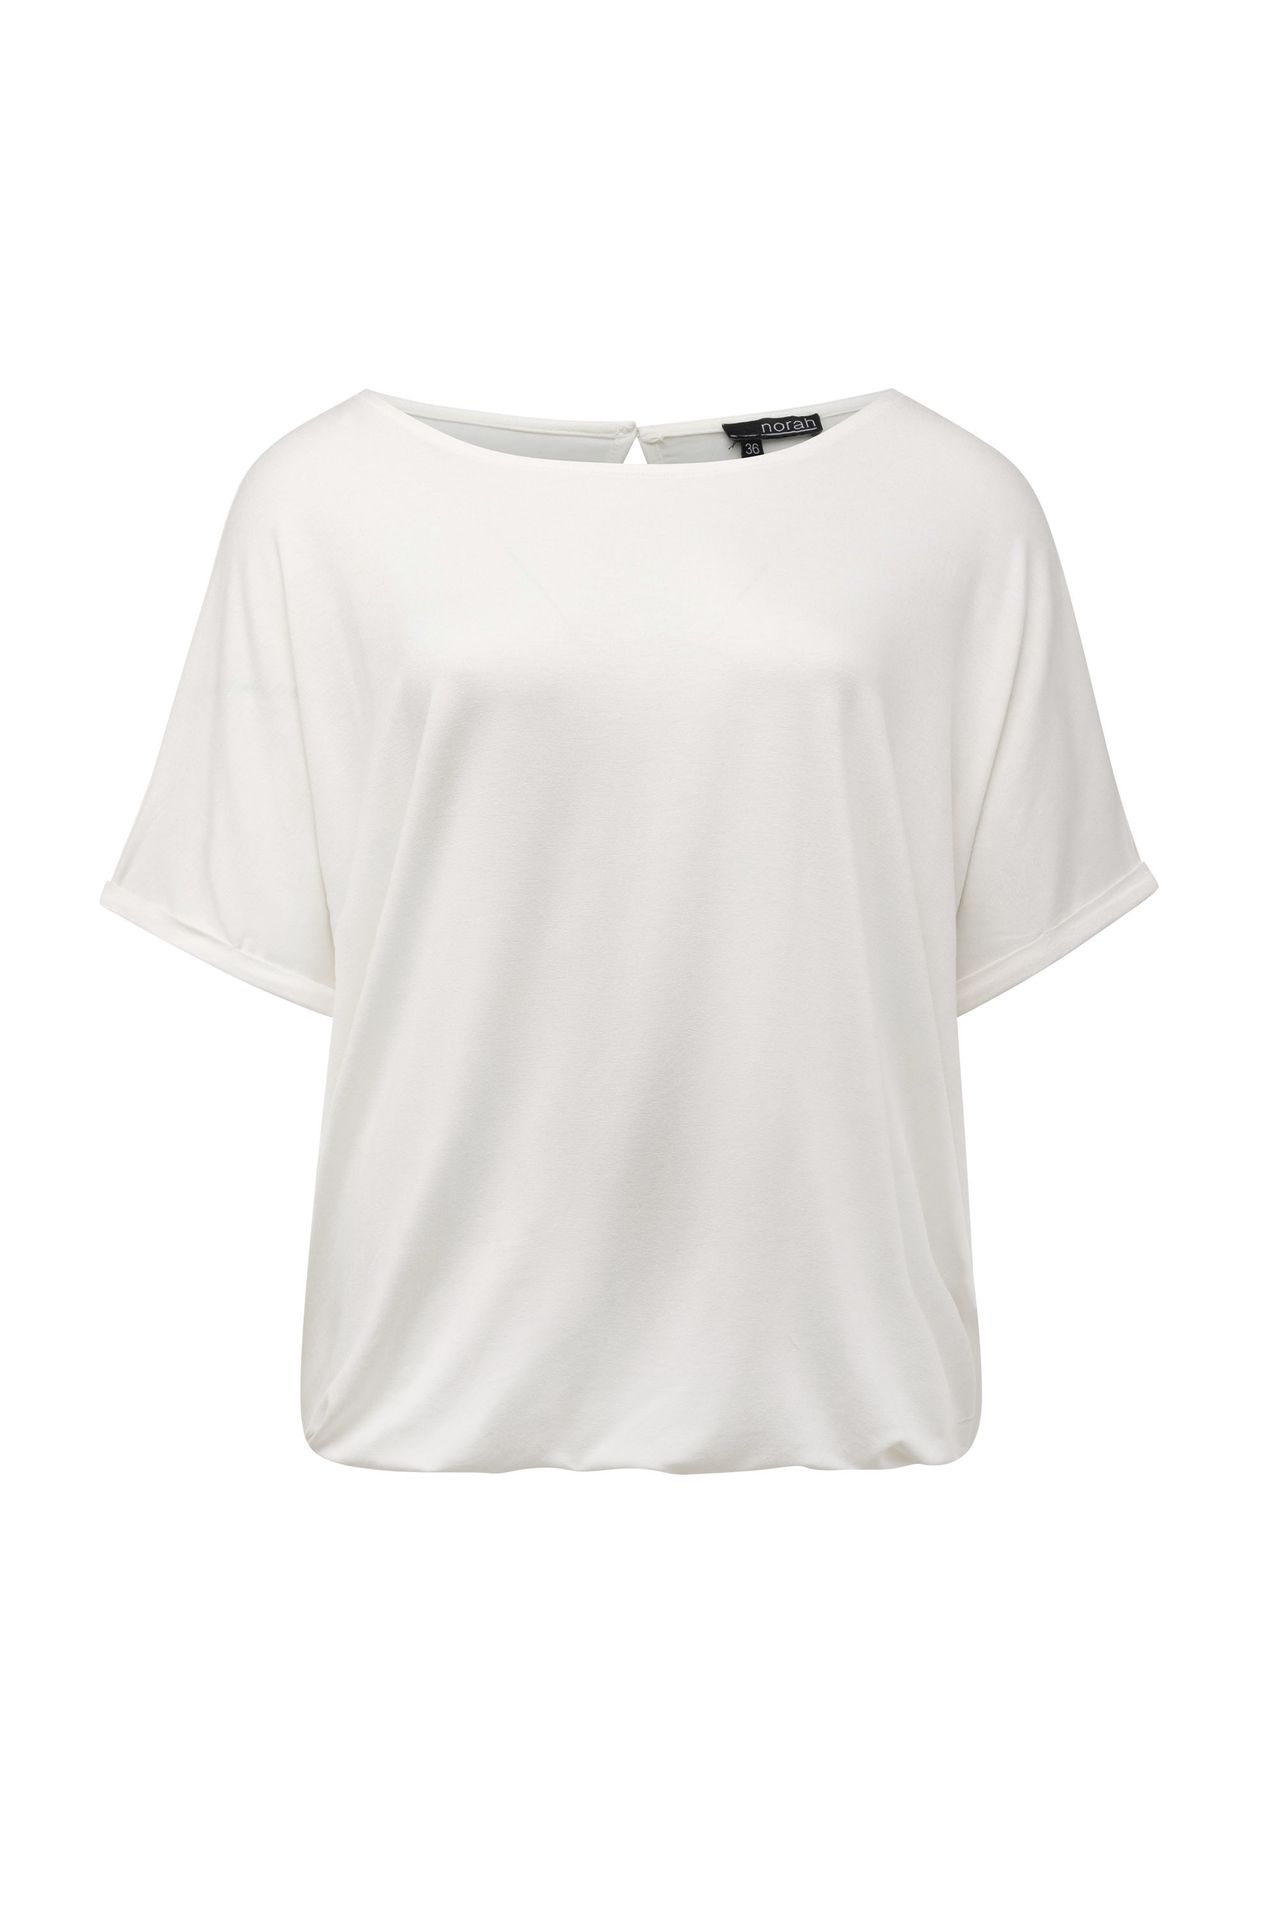 Norah Shirt off-white off-white 215230-101